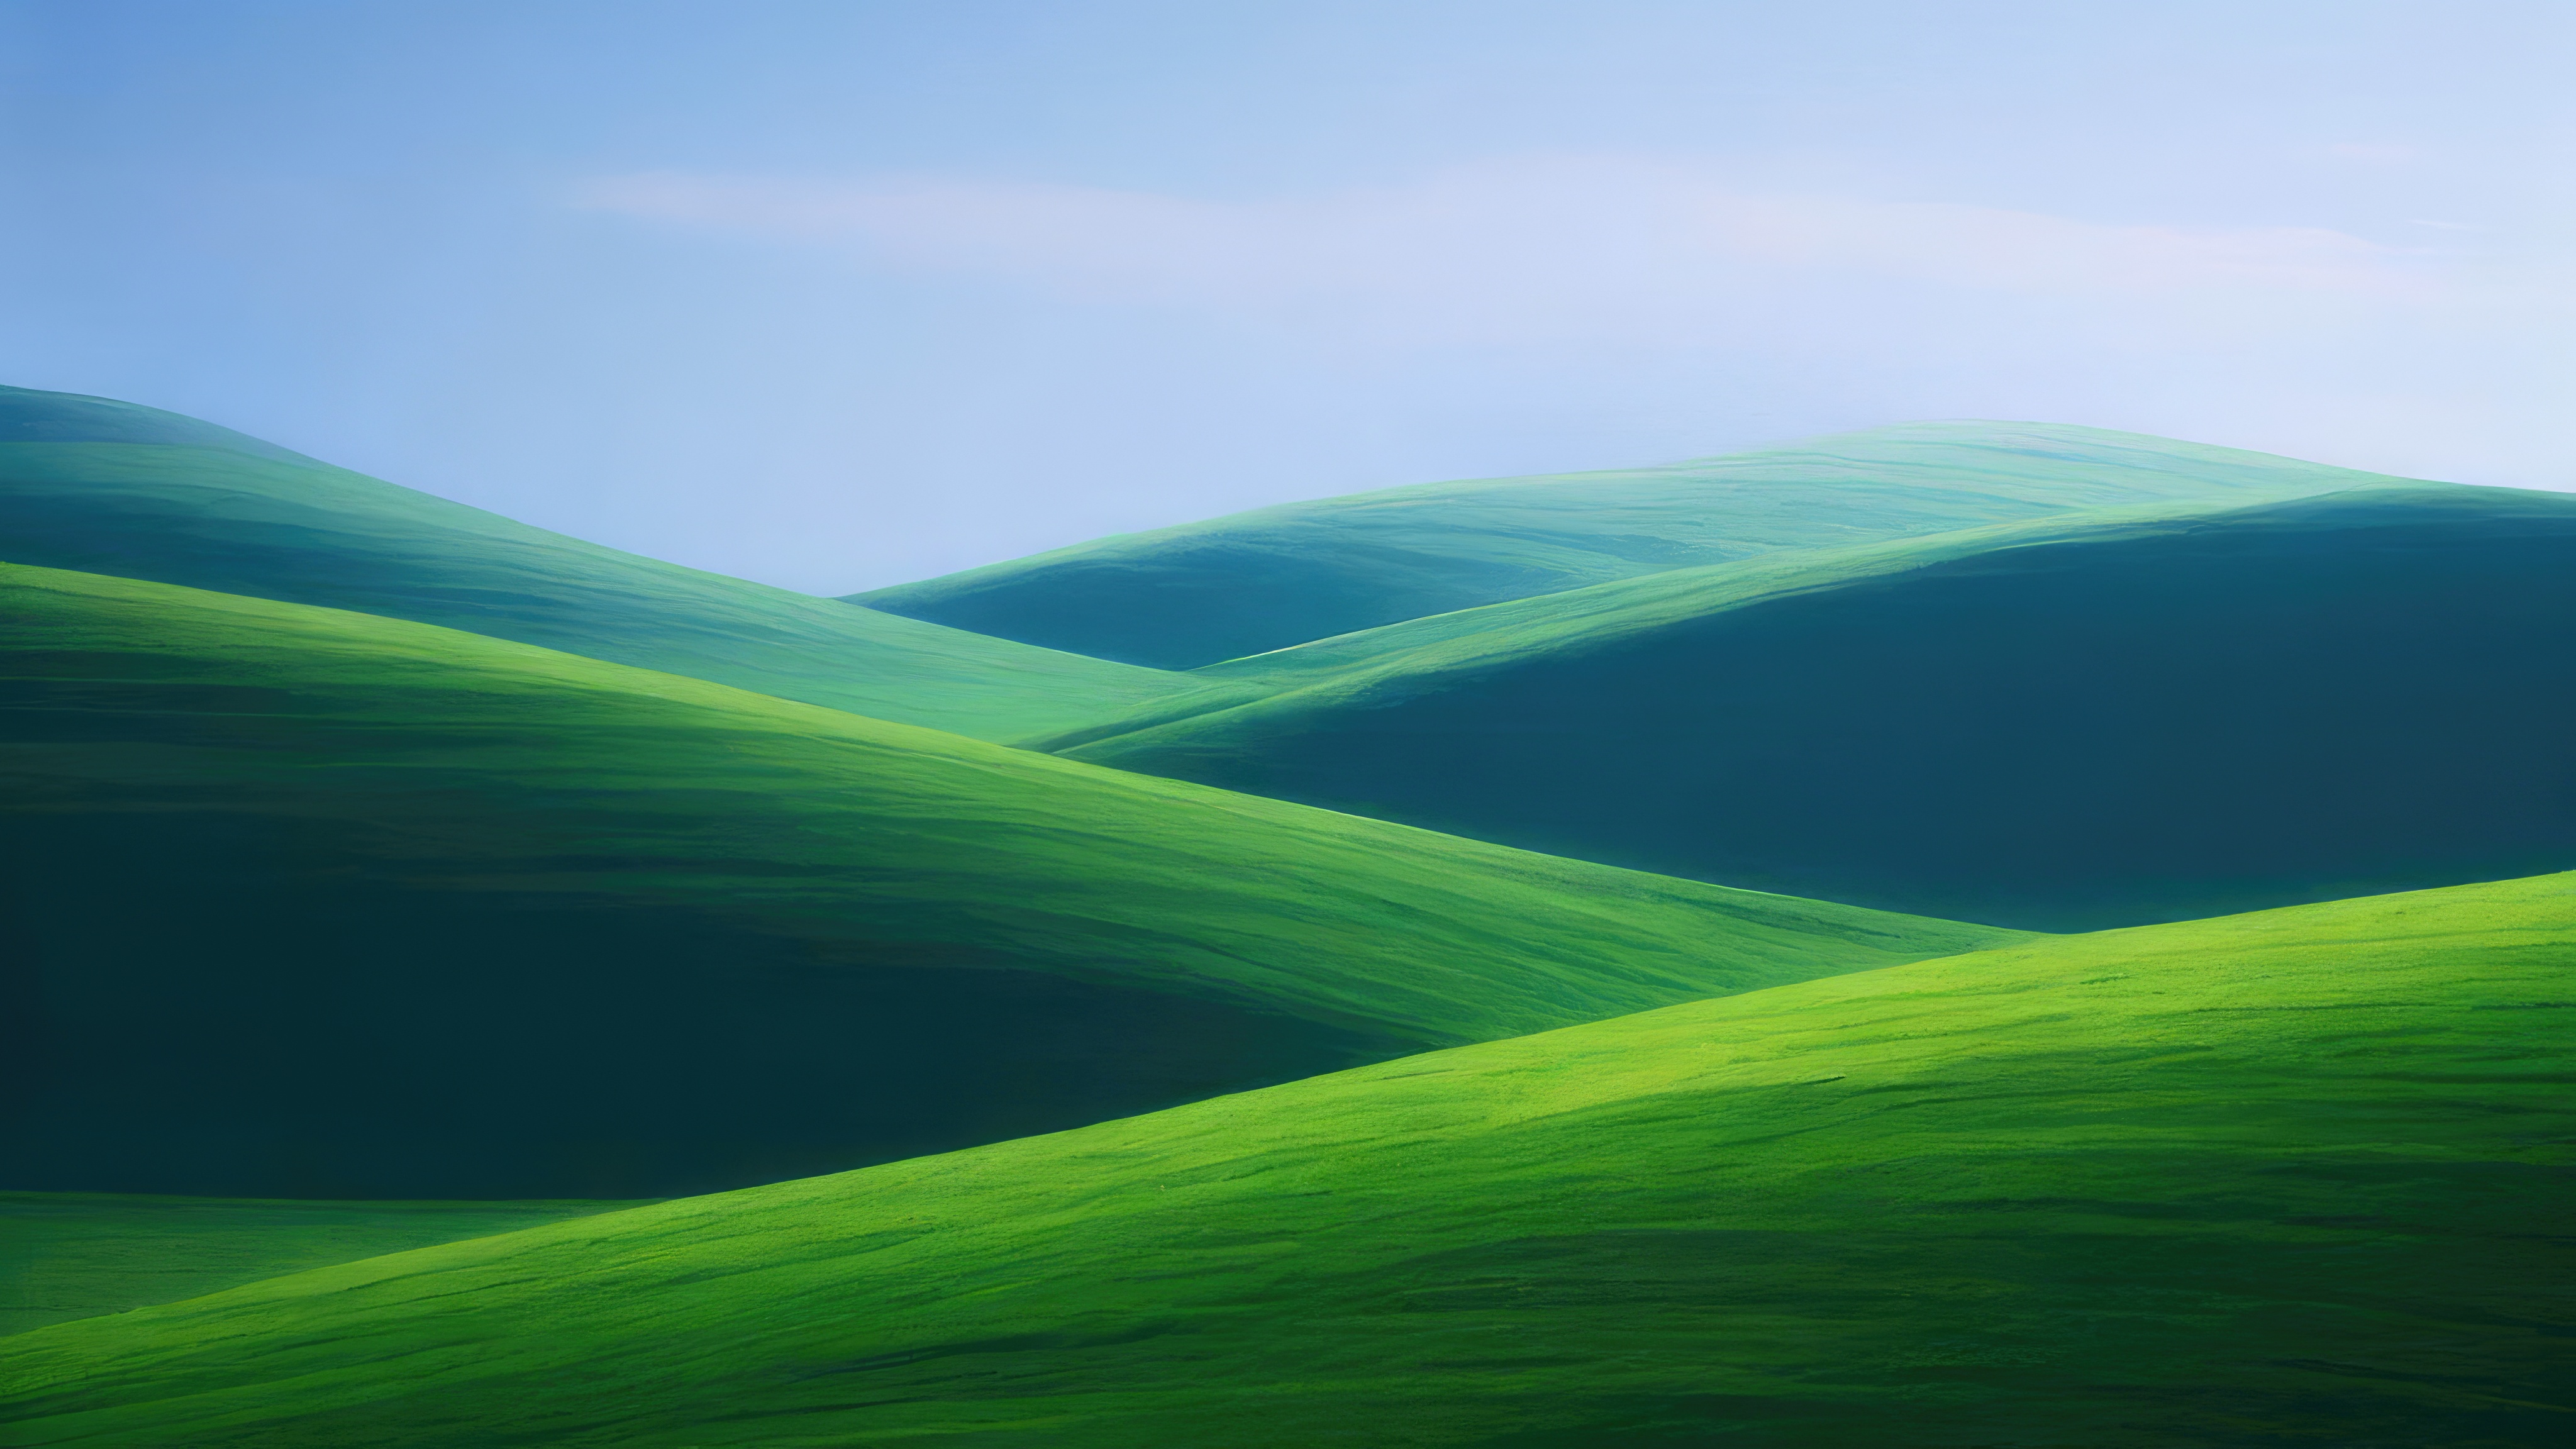 General 4096x2304 AI art landscape Windows XP bliss hills nature symmetry field simple background